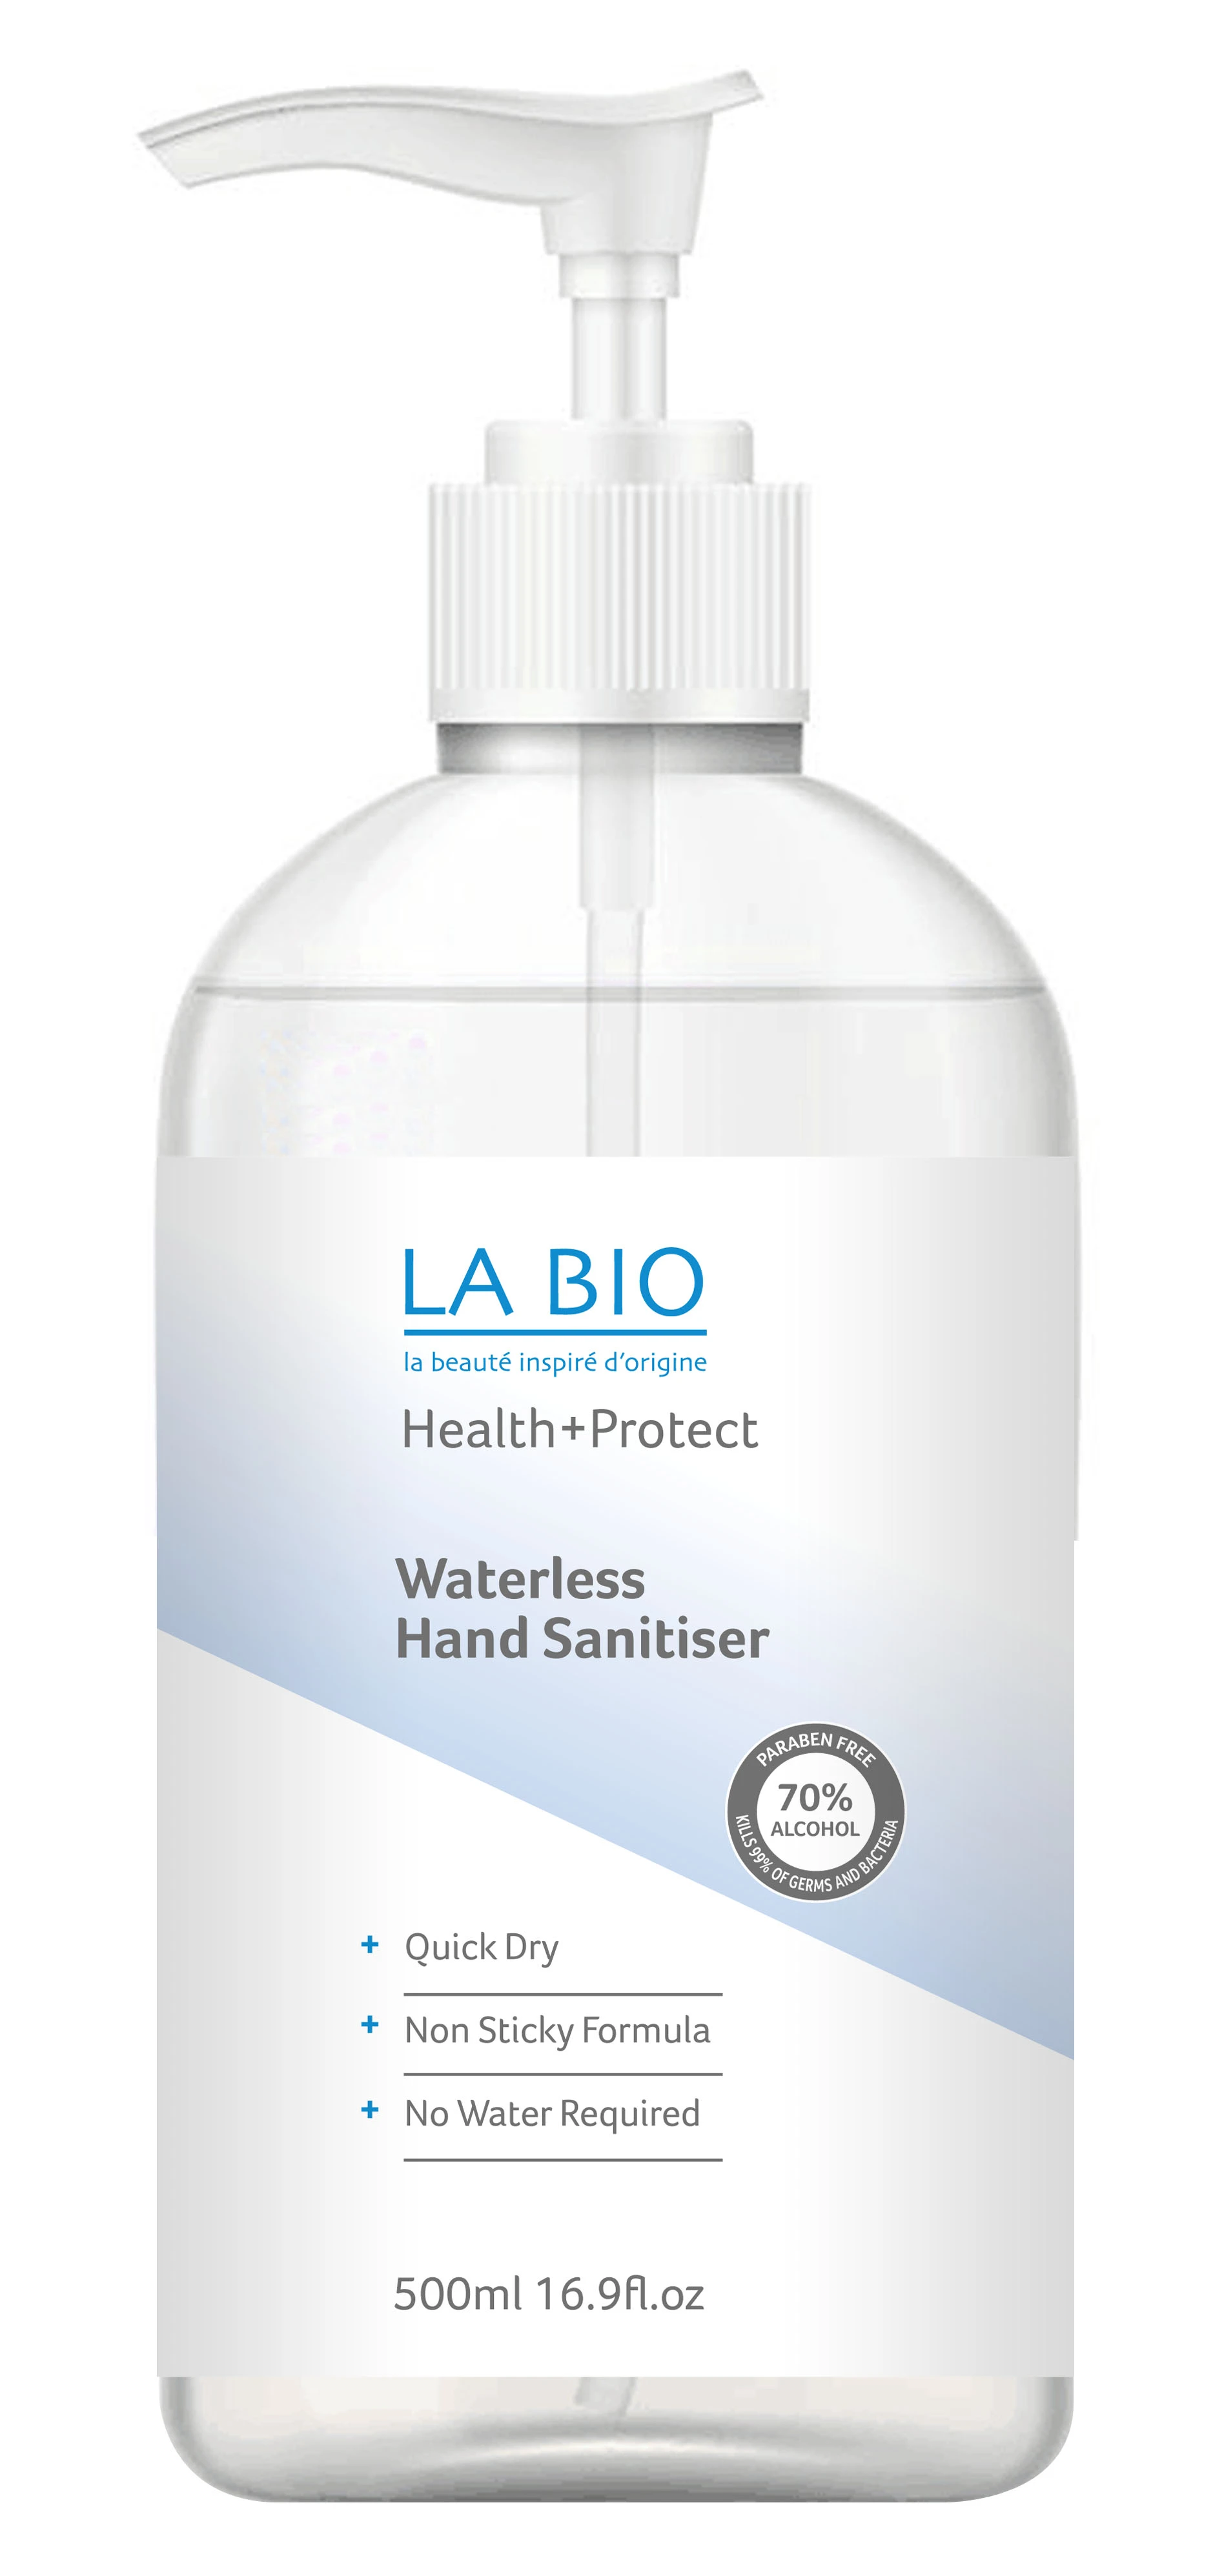 Rosemary 1L waterless Hand Sanitizer gel Dispenser 70% alcohol kill germ